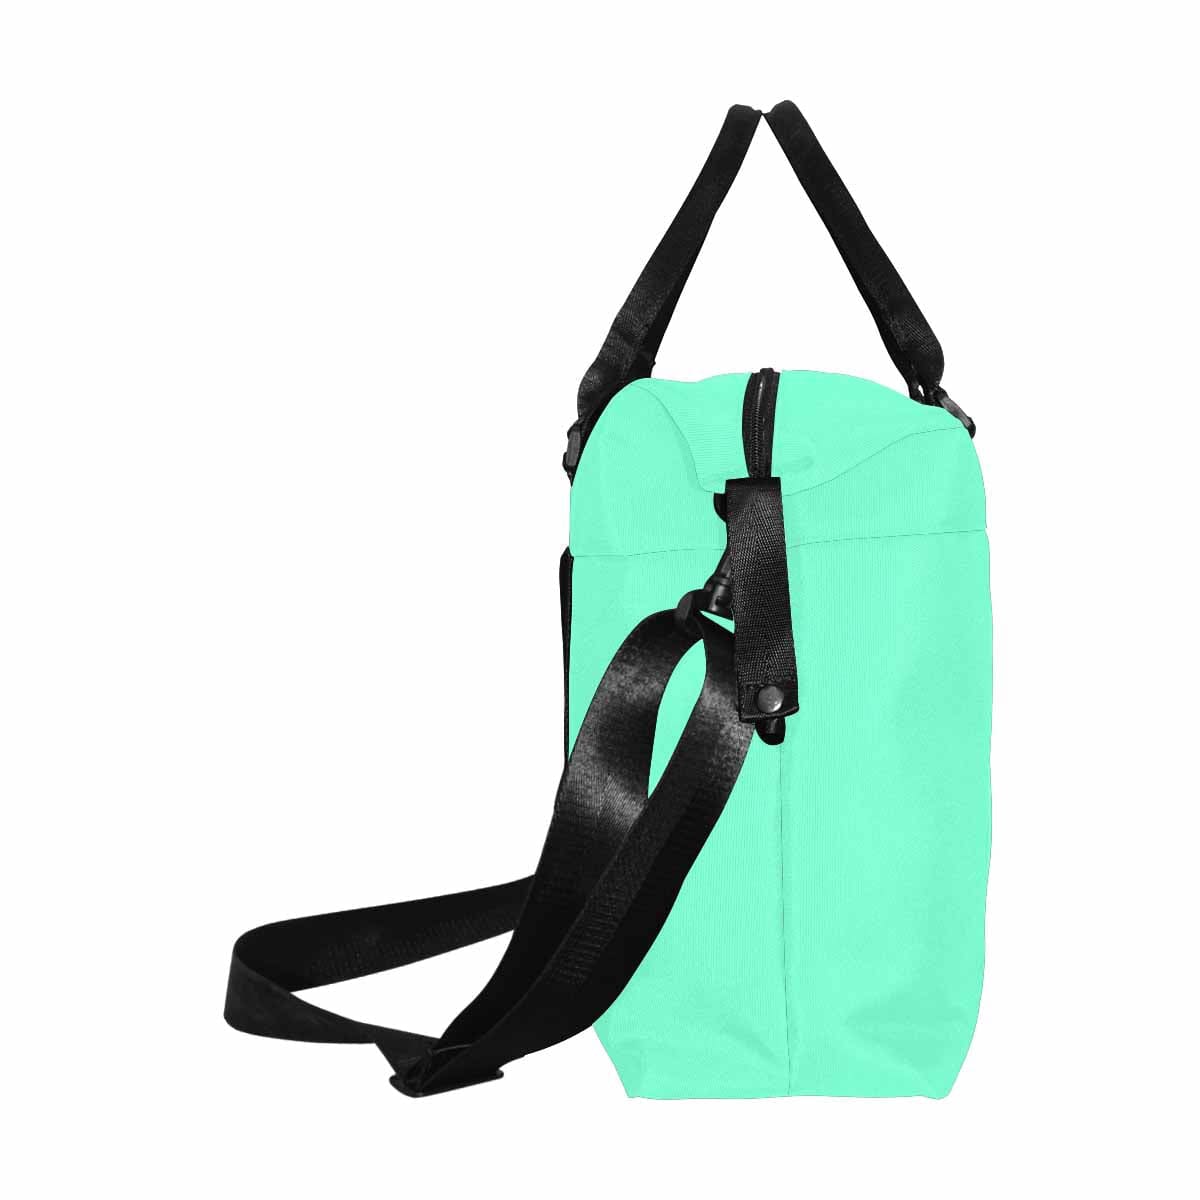 Aquamarine Green Duffel Bag Large Travel Carry On - Bags | Duffel Bags